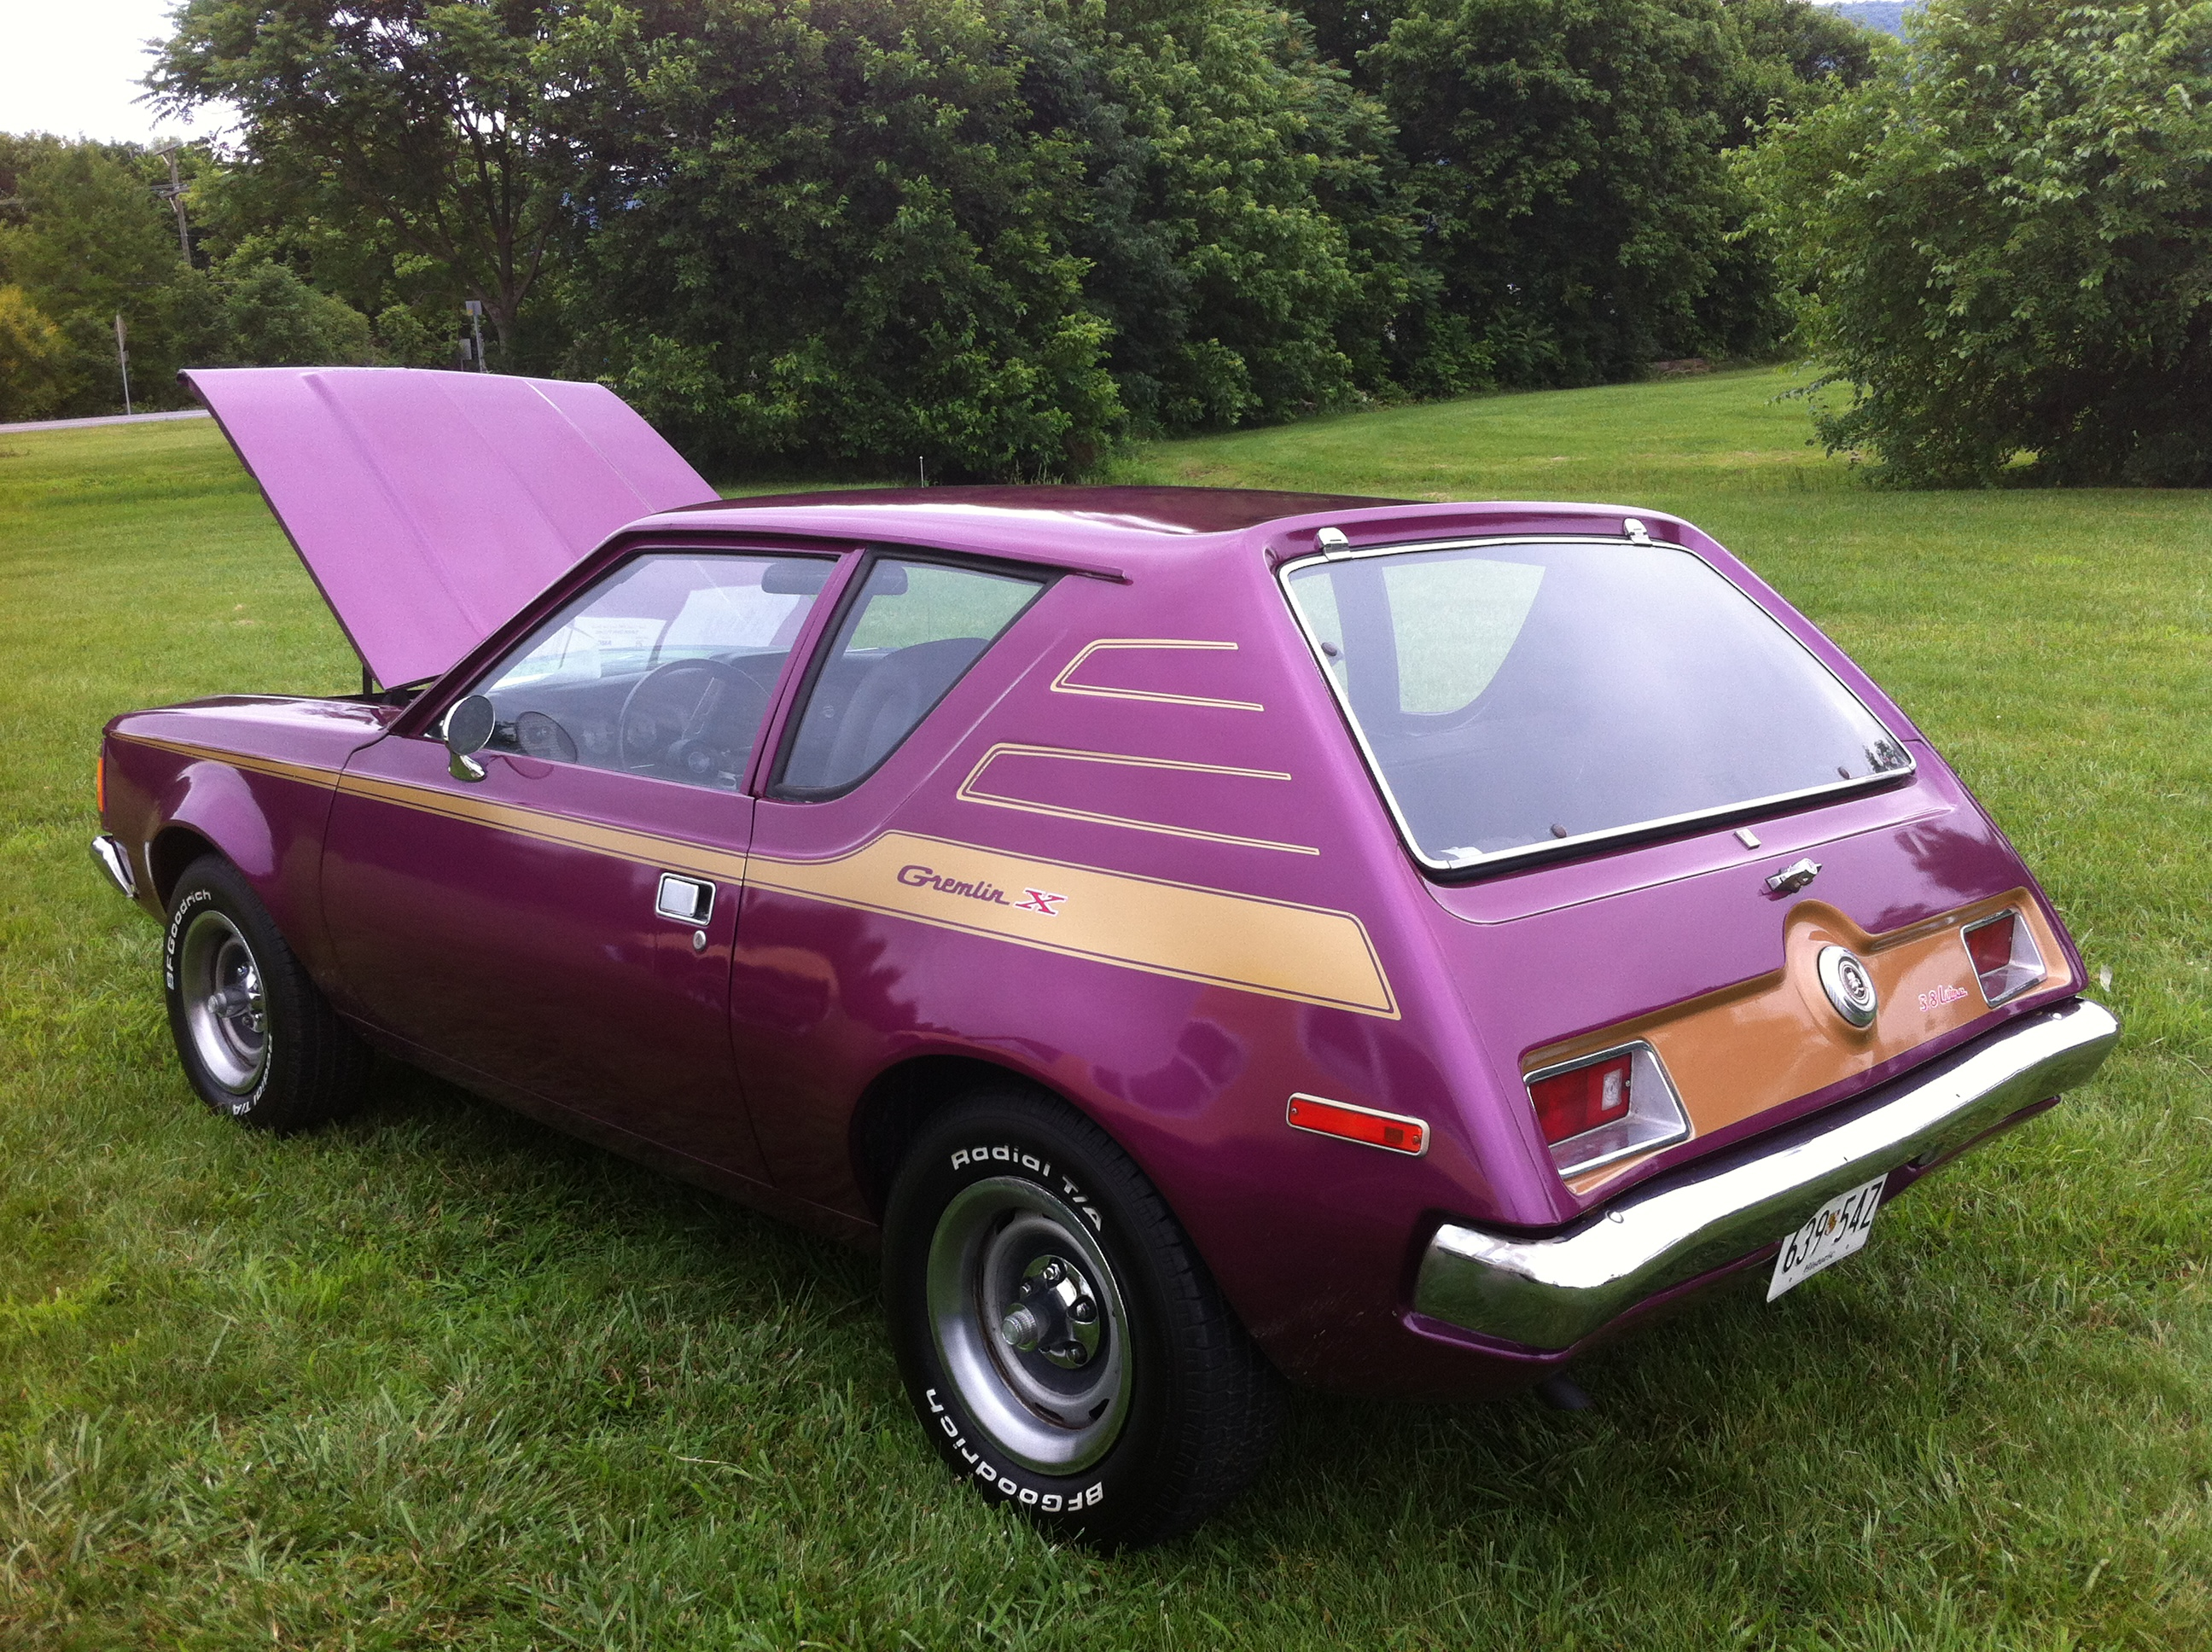 1972 AMC Gremlin X at Mason-Dixon Dragway 2014 purple-4.jpg. 